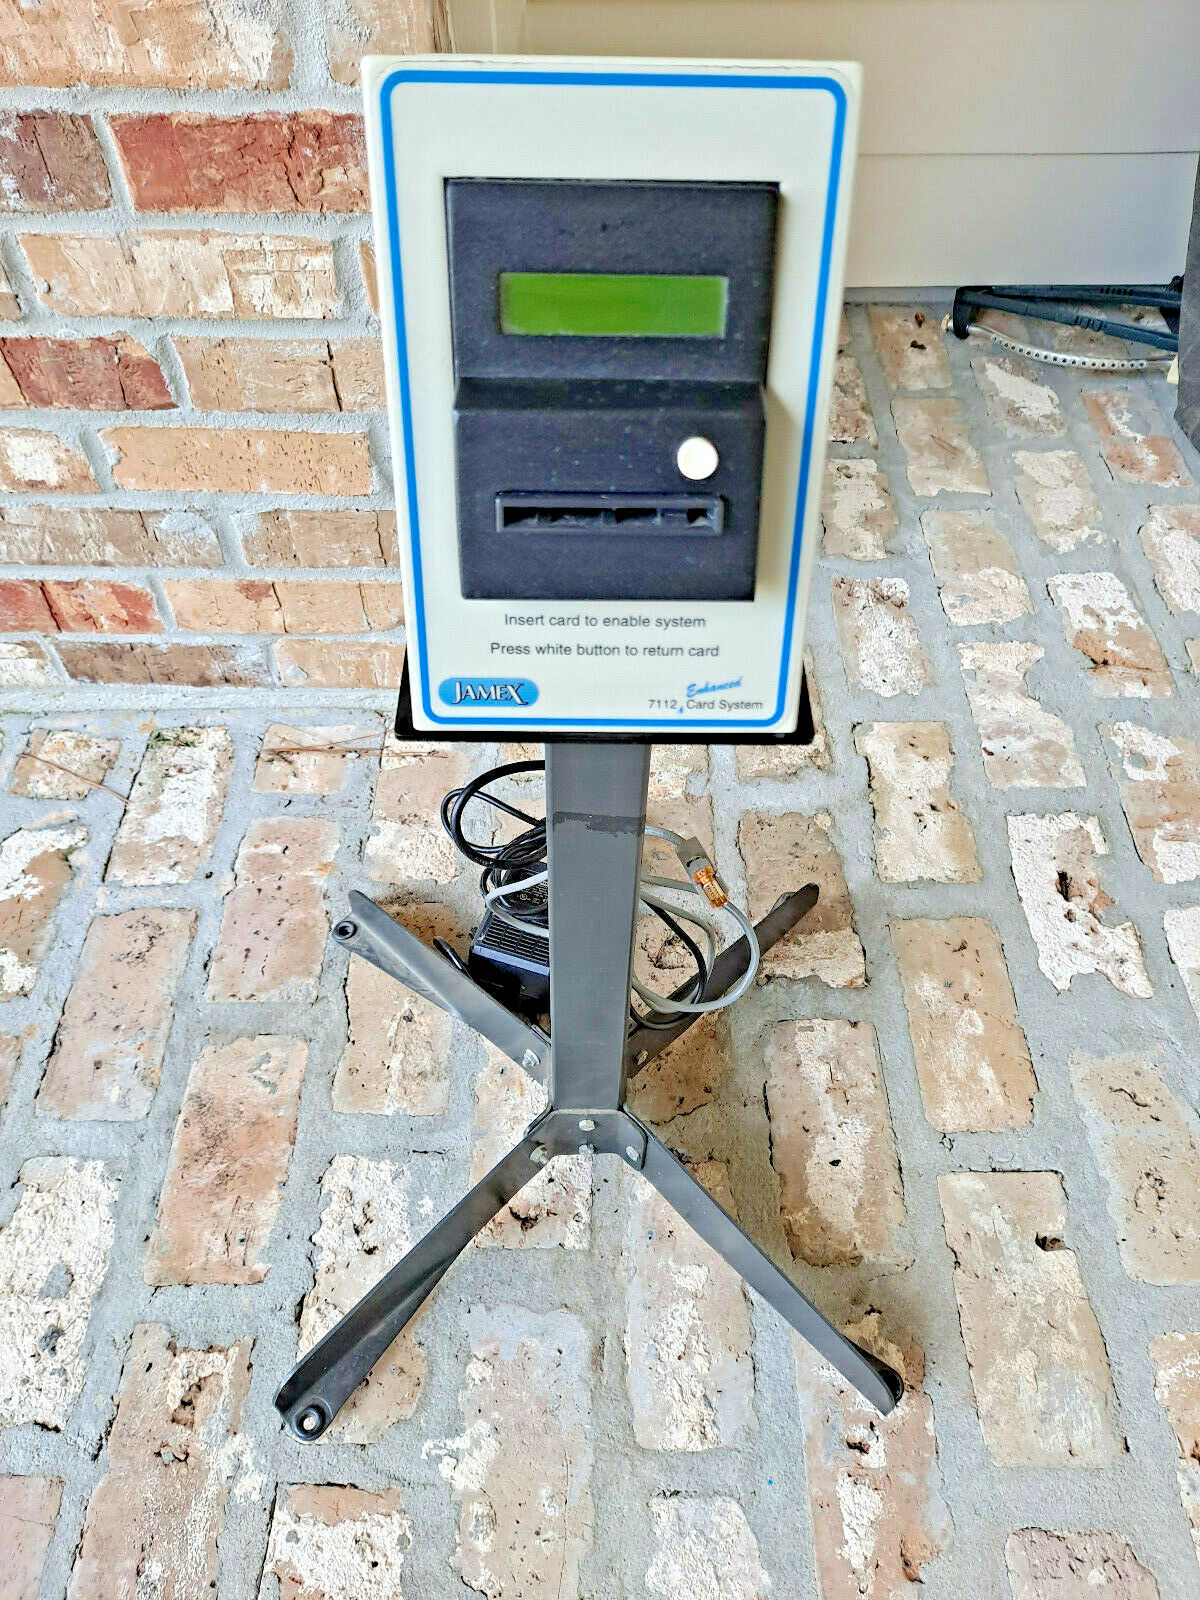 Jamex 7112 Photo Copier Enhanced Card System Reader, Display Power Supply Stand